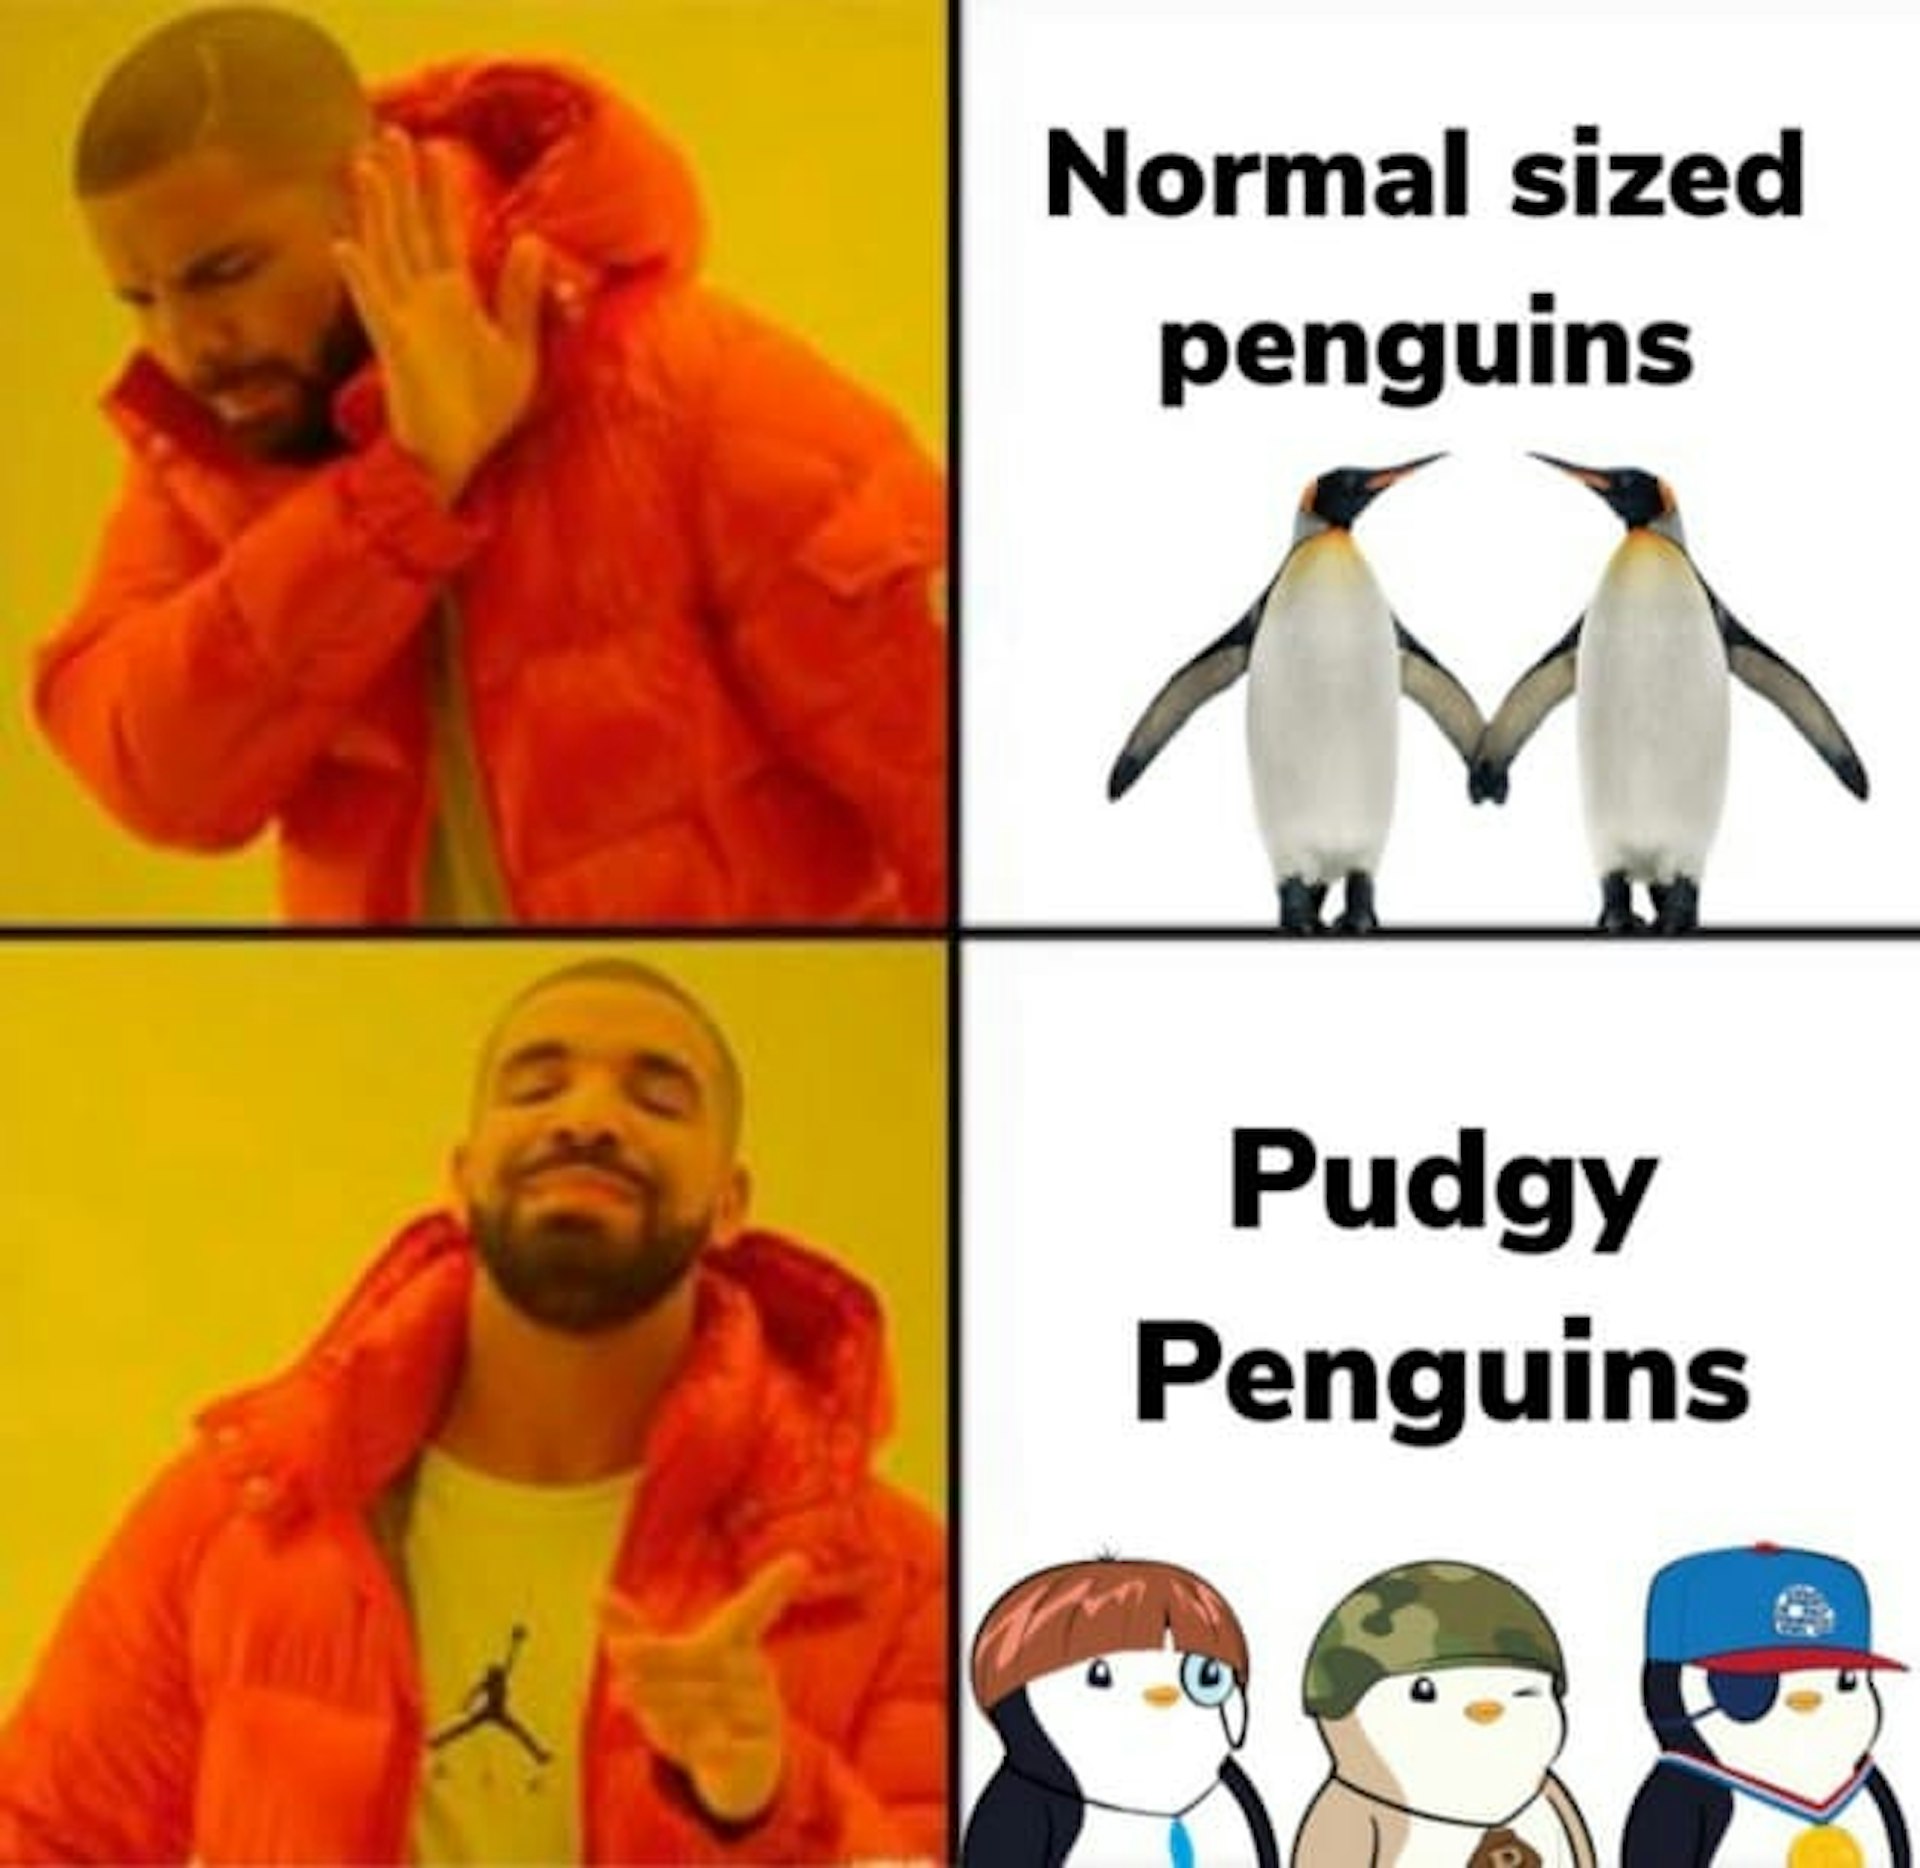 Pudgy Penguins Drake Meme